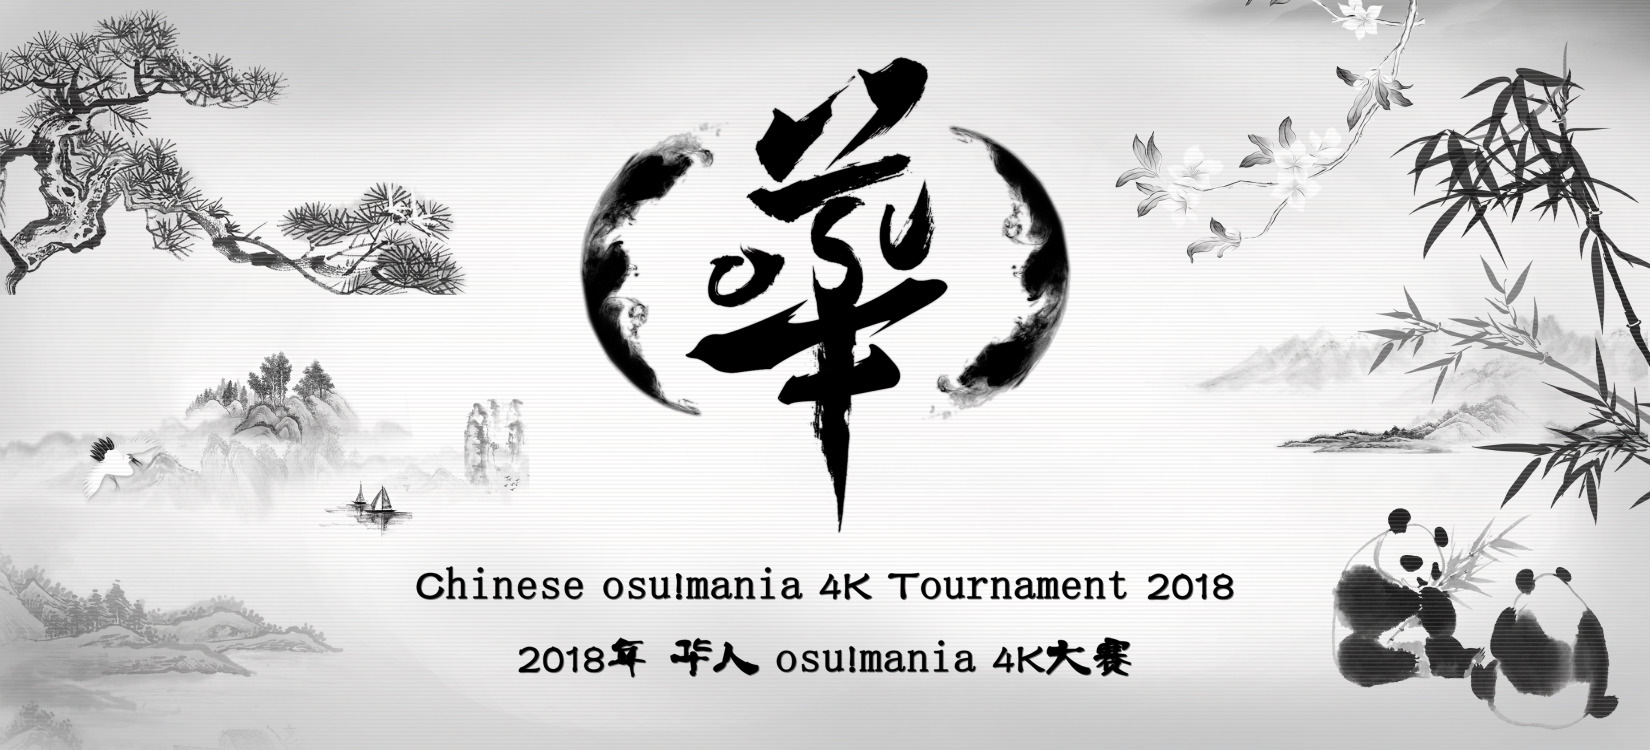 Cmt 4k Chinese Osu Mania 4k Tournament 18 Knowledge Base Osu